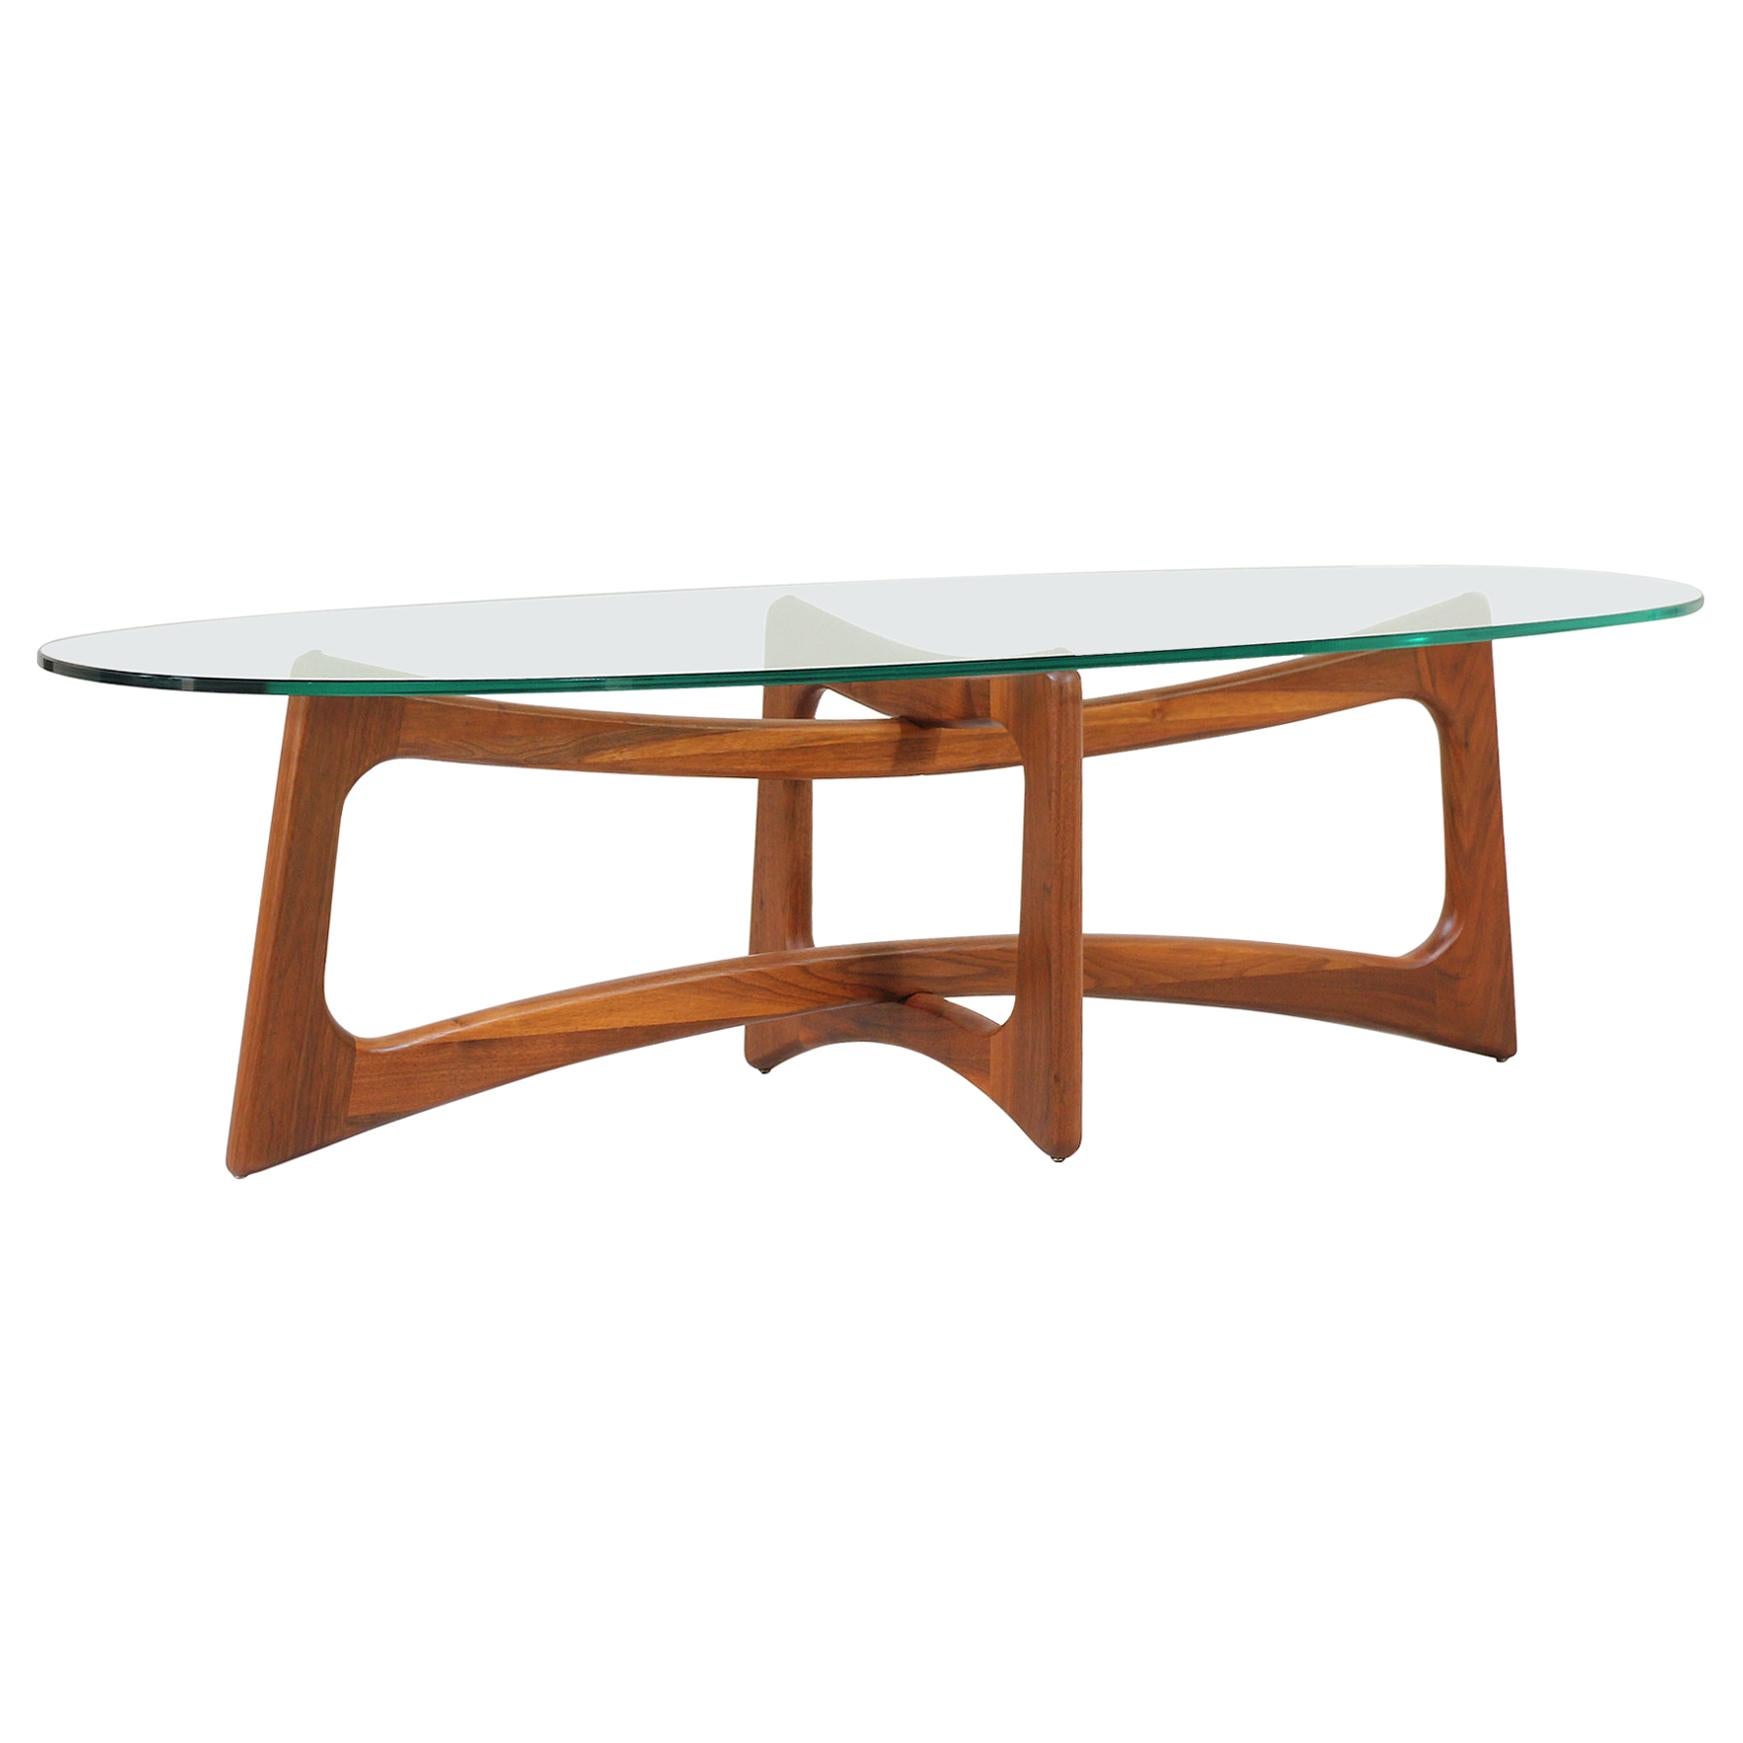 Adrian Pearsall 2454-TGO Coffee Table for Craft Associates